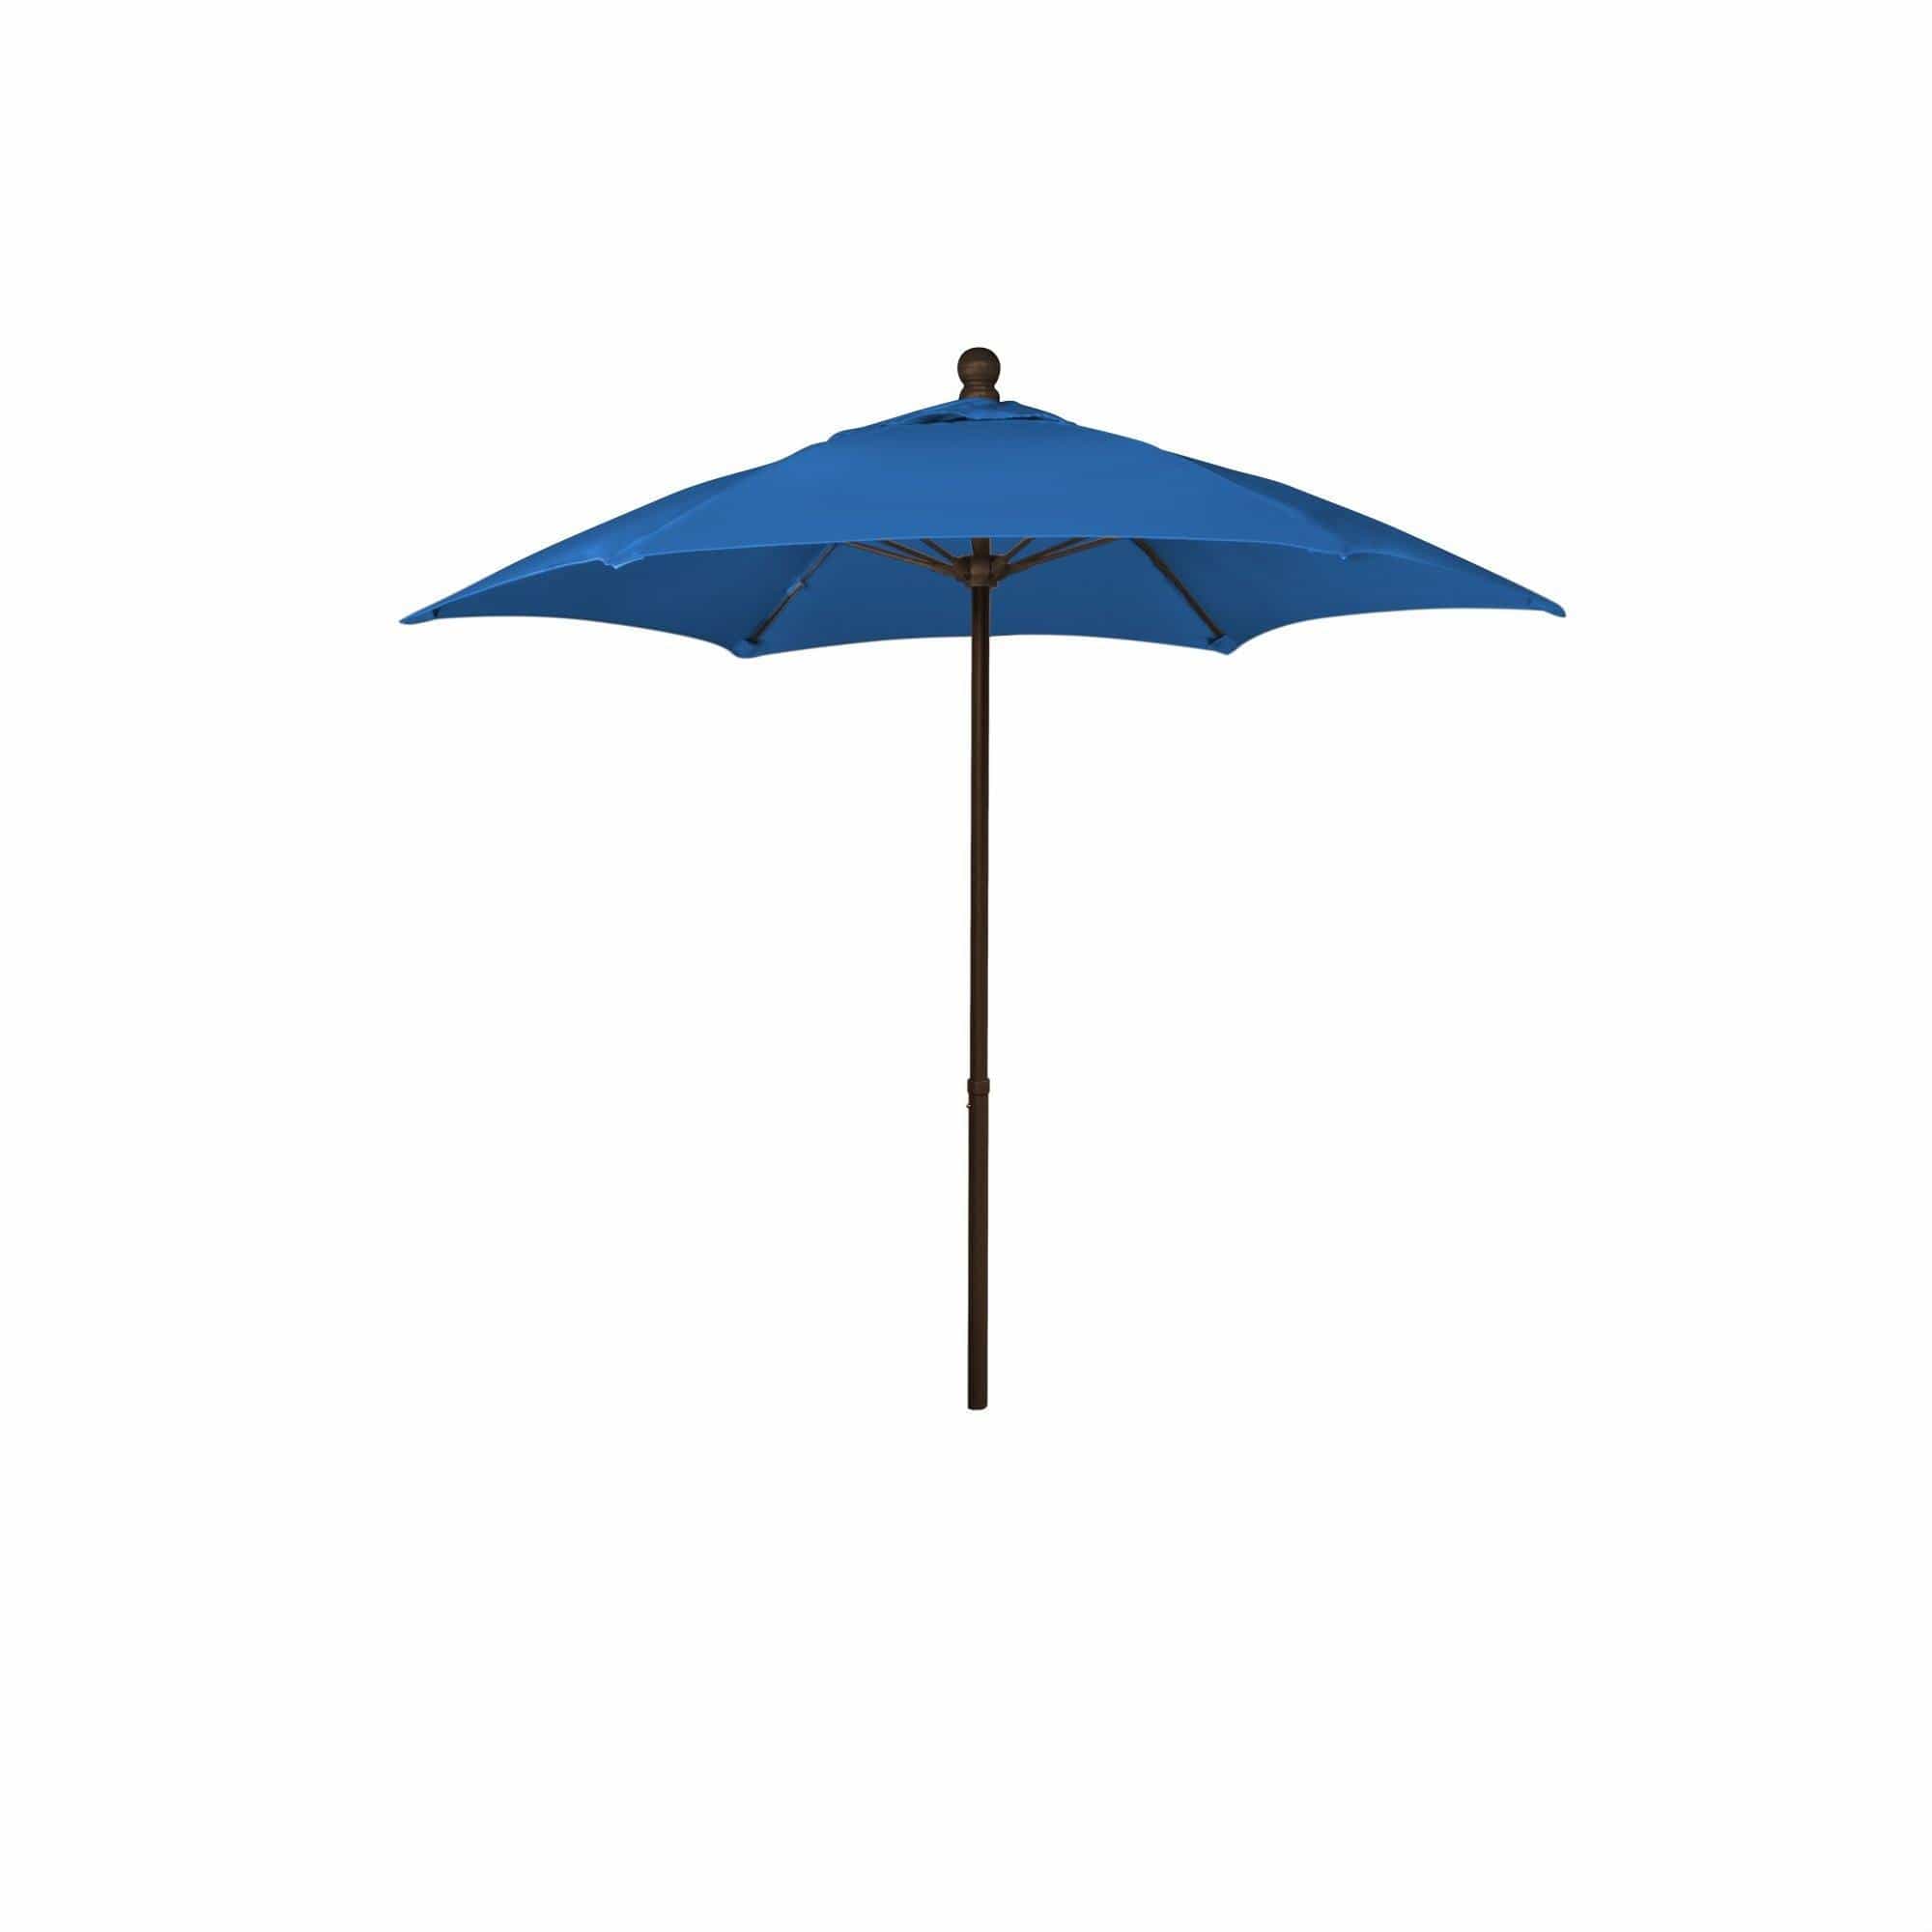 Fiberbuilt Table Umbrellas Pacific Blue 7.5' Hex Terrace Umbrella 6 Rib Push Up Champagne Bronze  Solution Dyed Acrylic Canopy